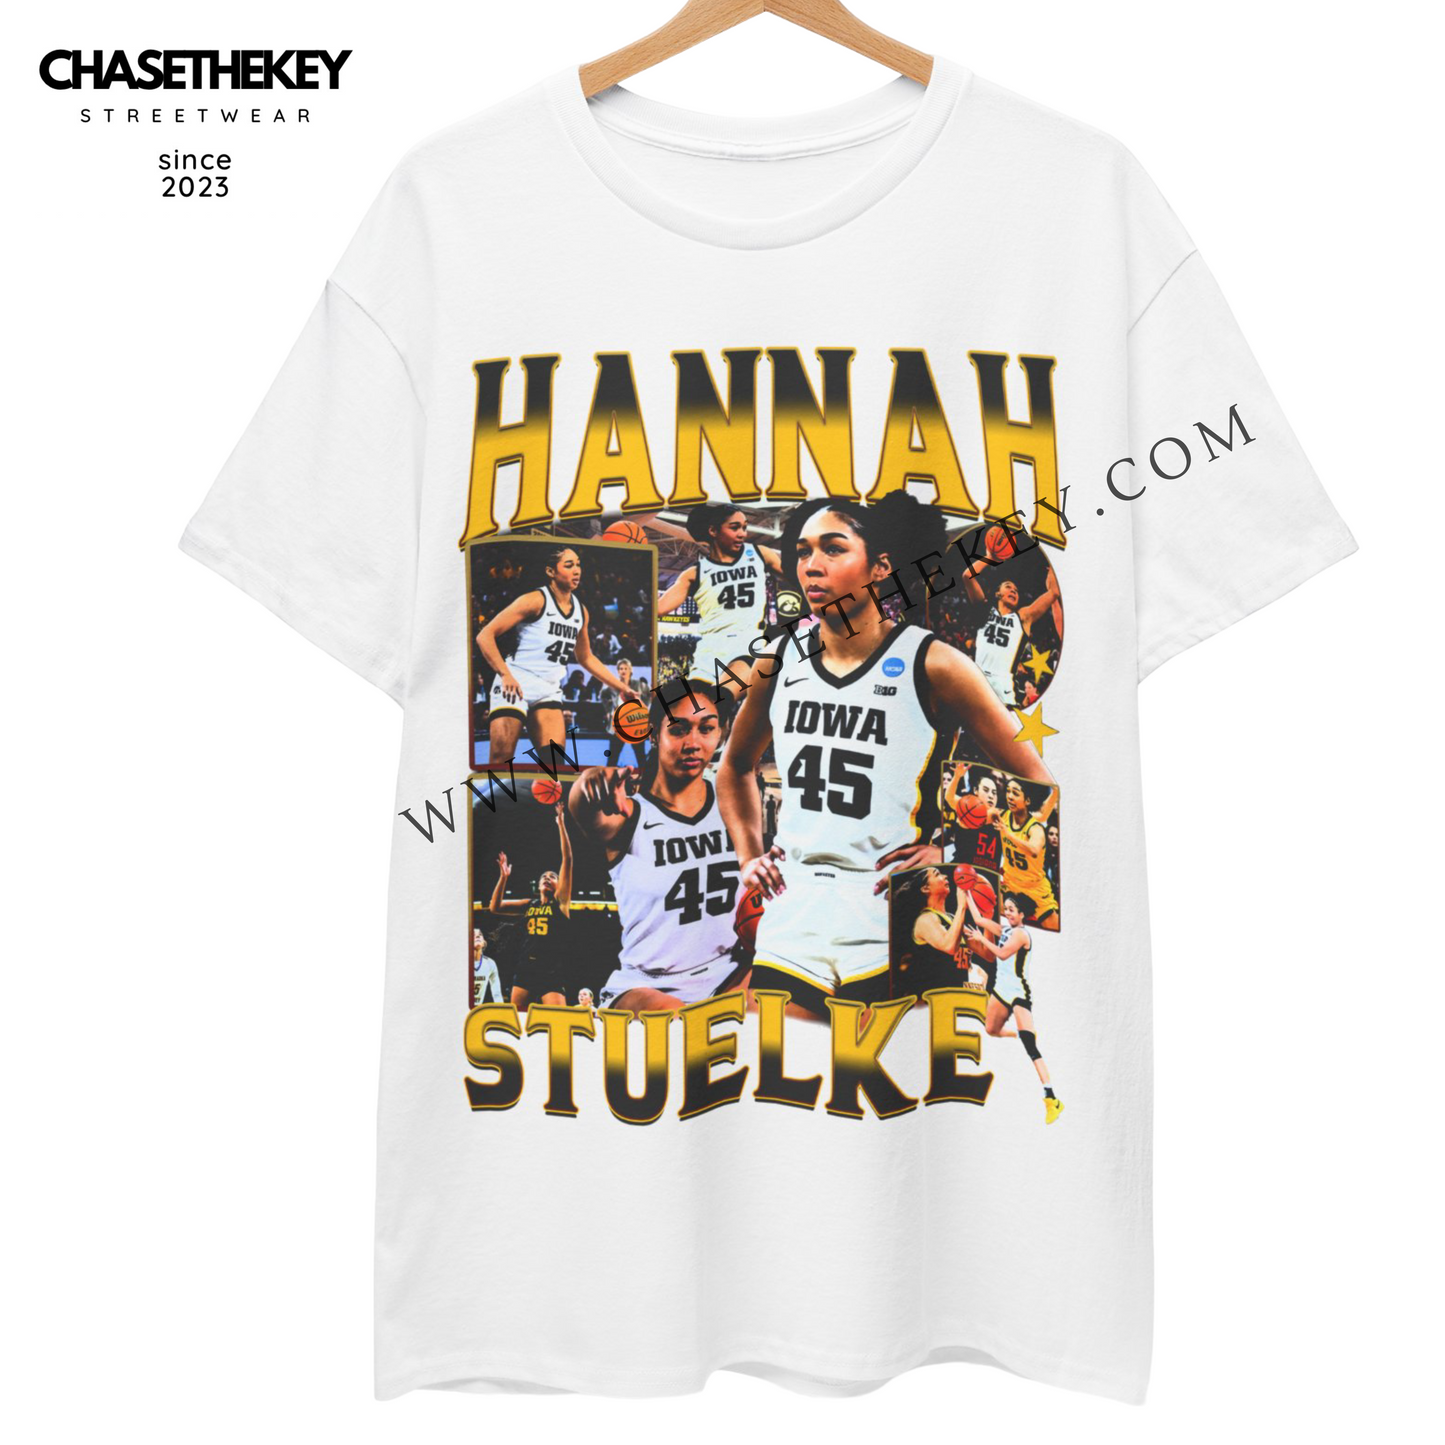 Hannah Stuelke Shirt